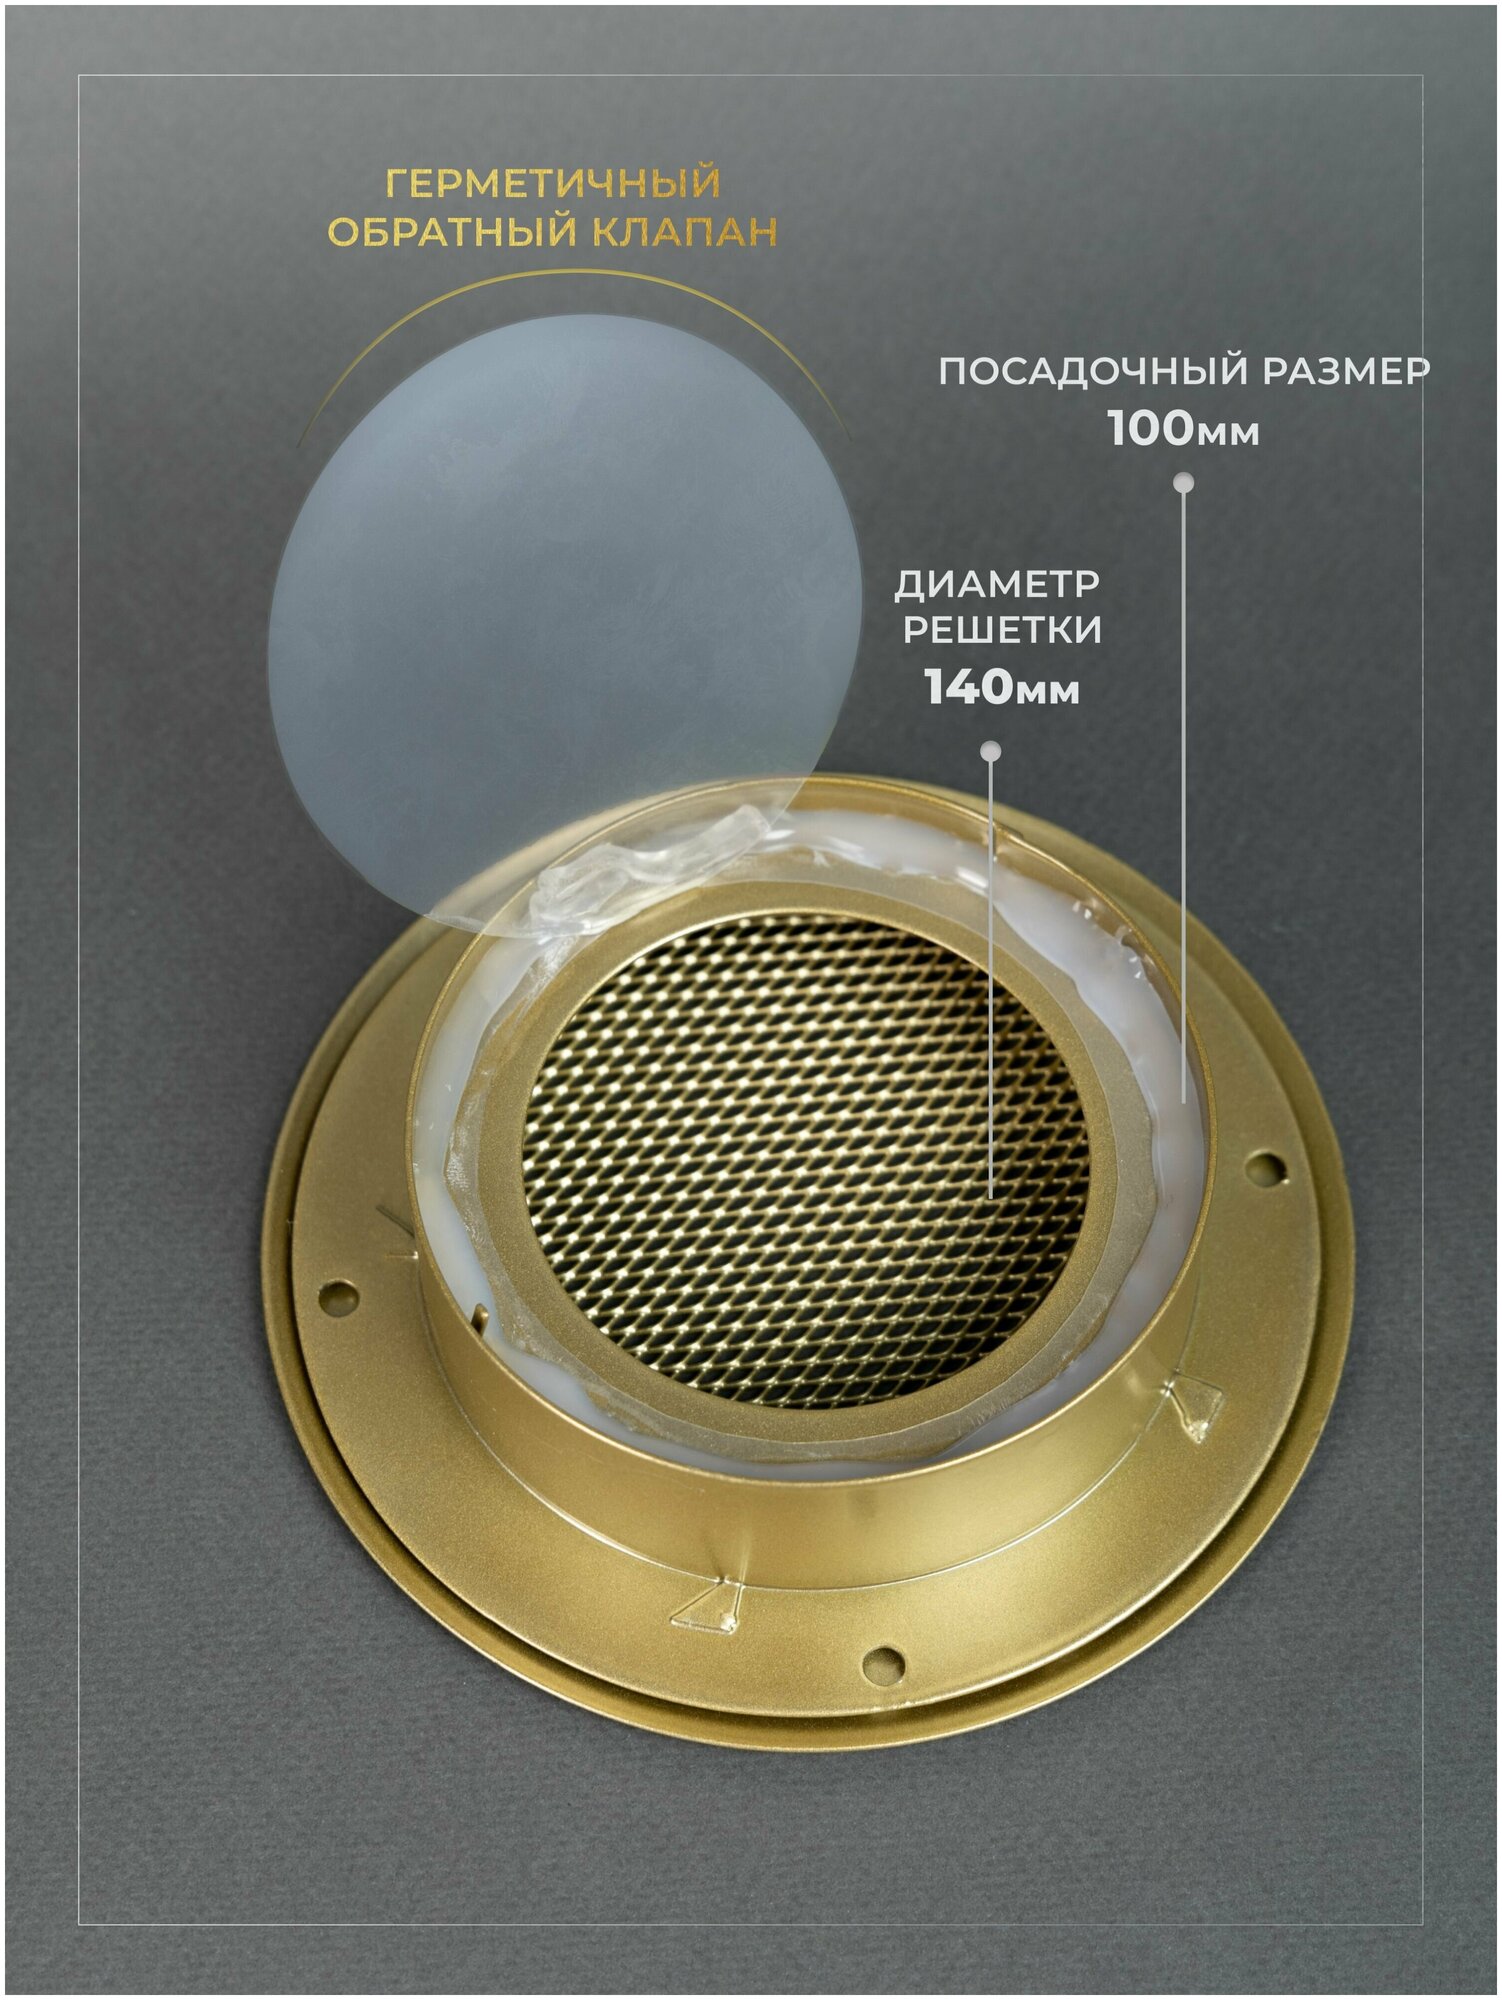 Вентиляционная решетка на магнитах 100x100 мм. съемная (100КРОК), металлическая, от производителя Родфер - фотография № 2